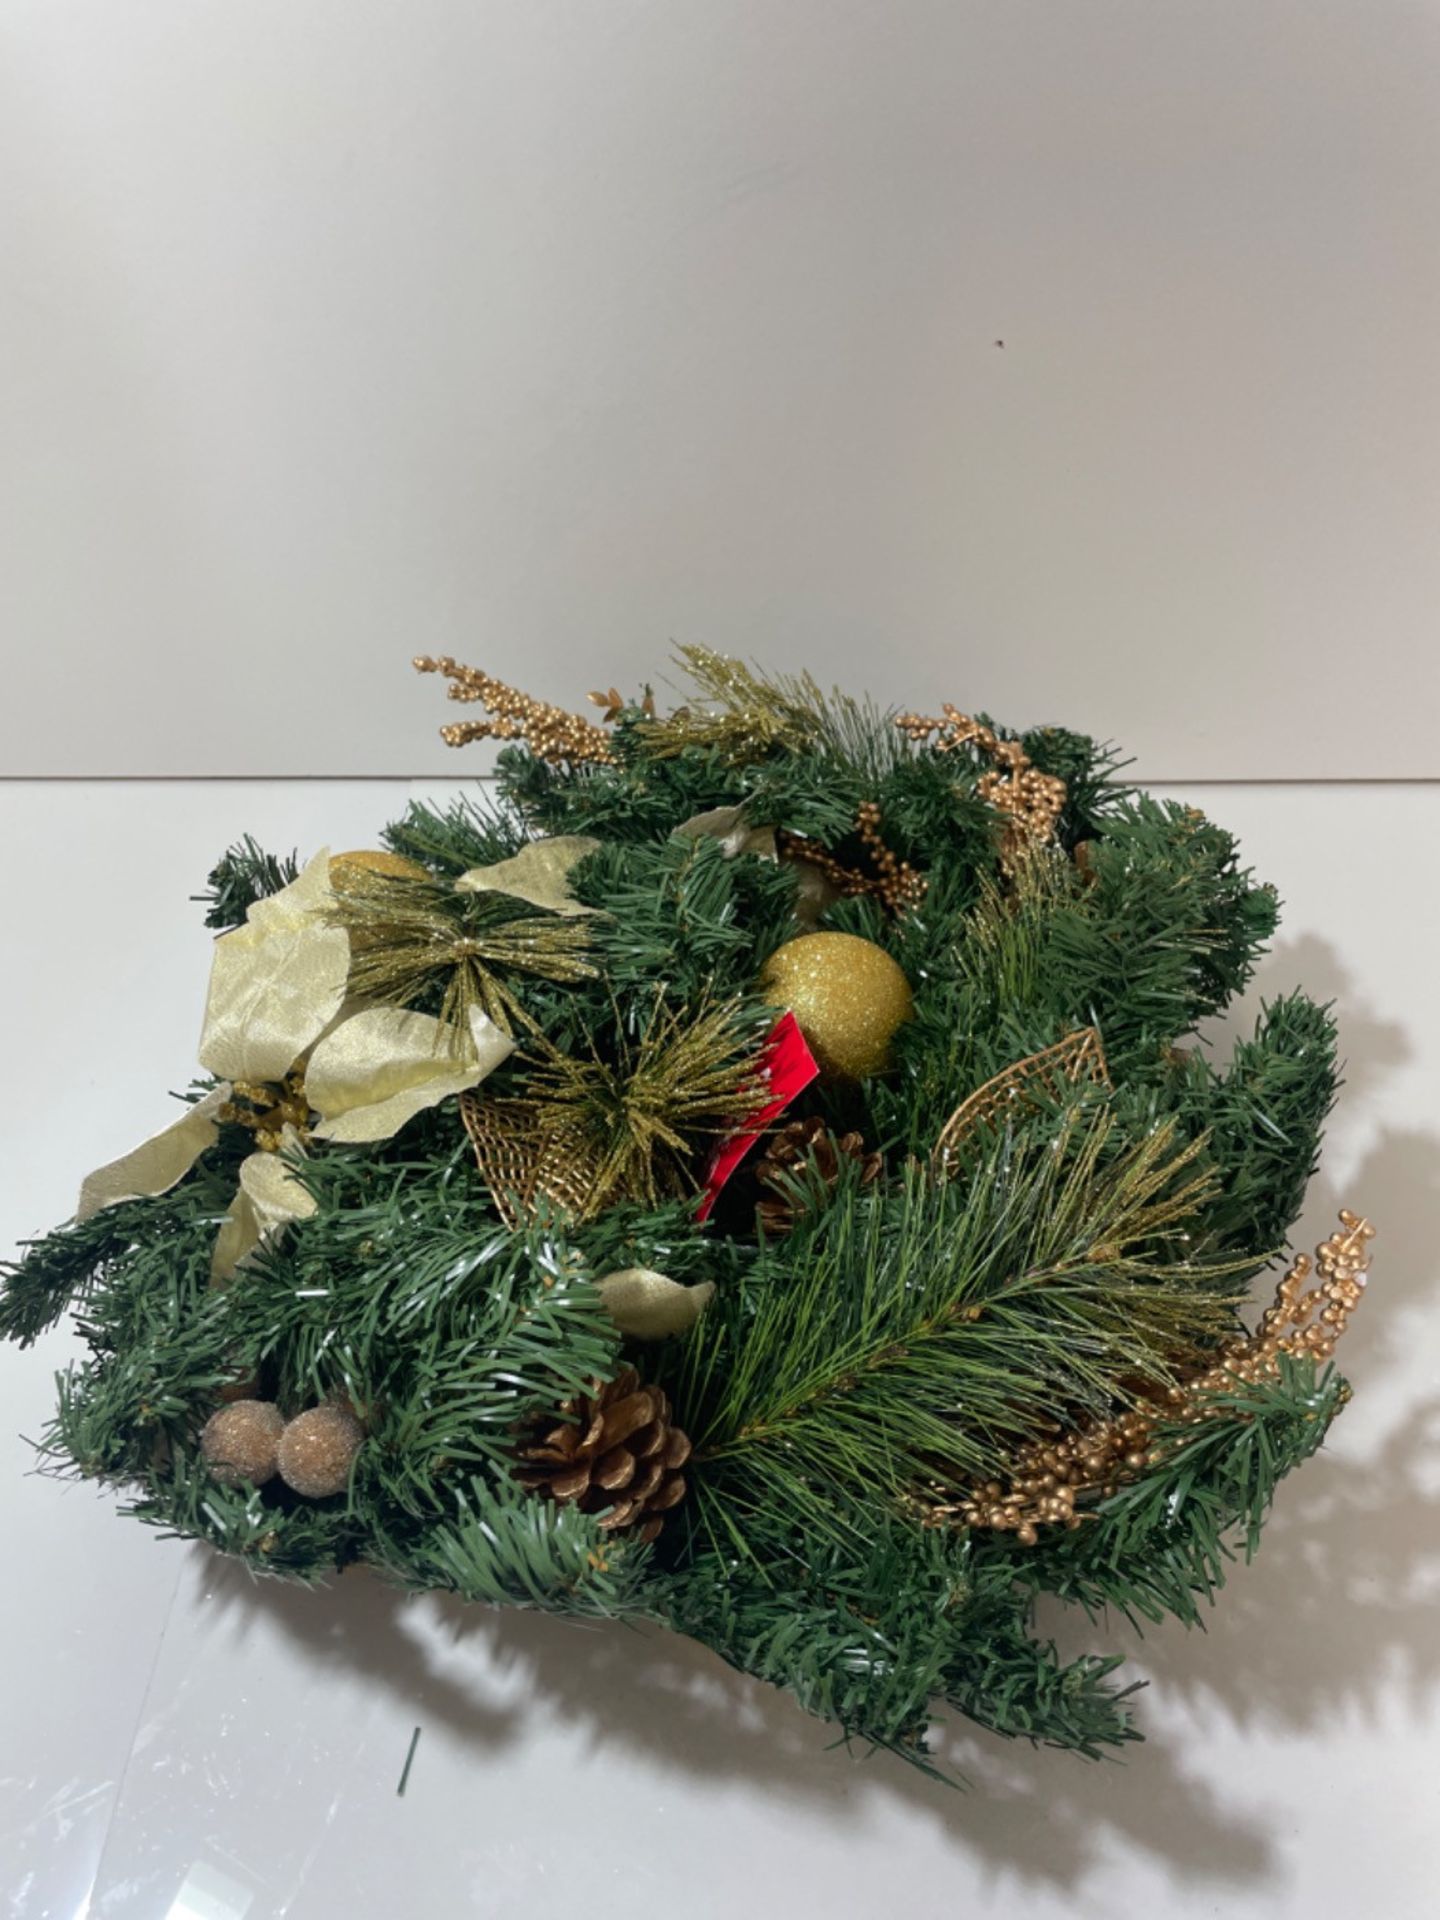 WeRChristmas Decorated Garland Christmas Decoration, 6 Feet - Cream/Gold - Image 2 of 3